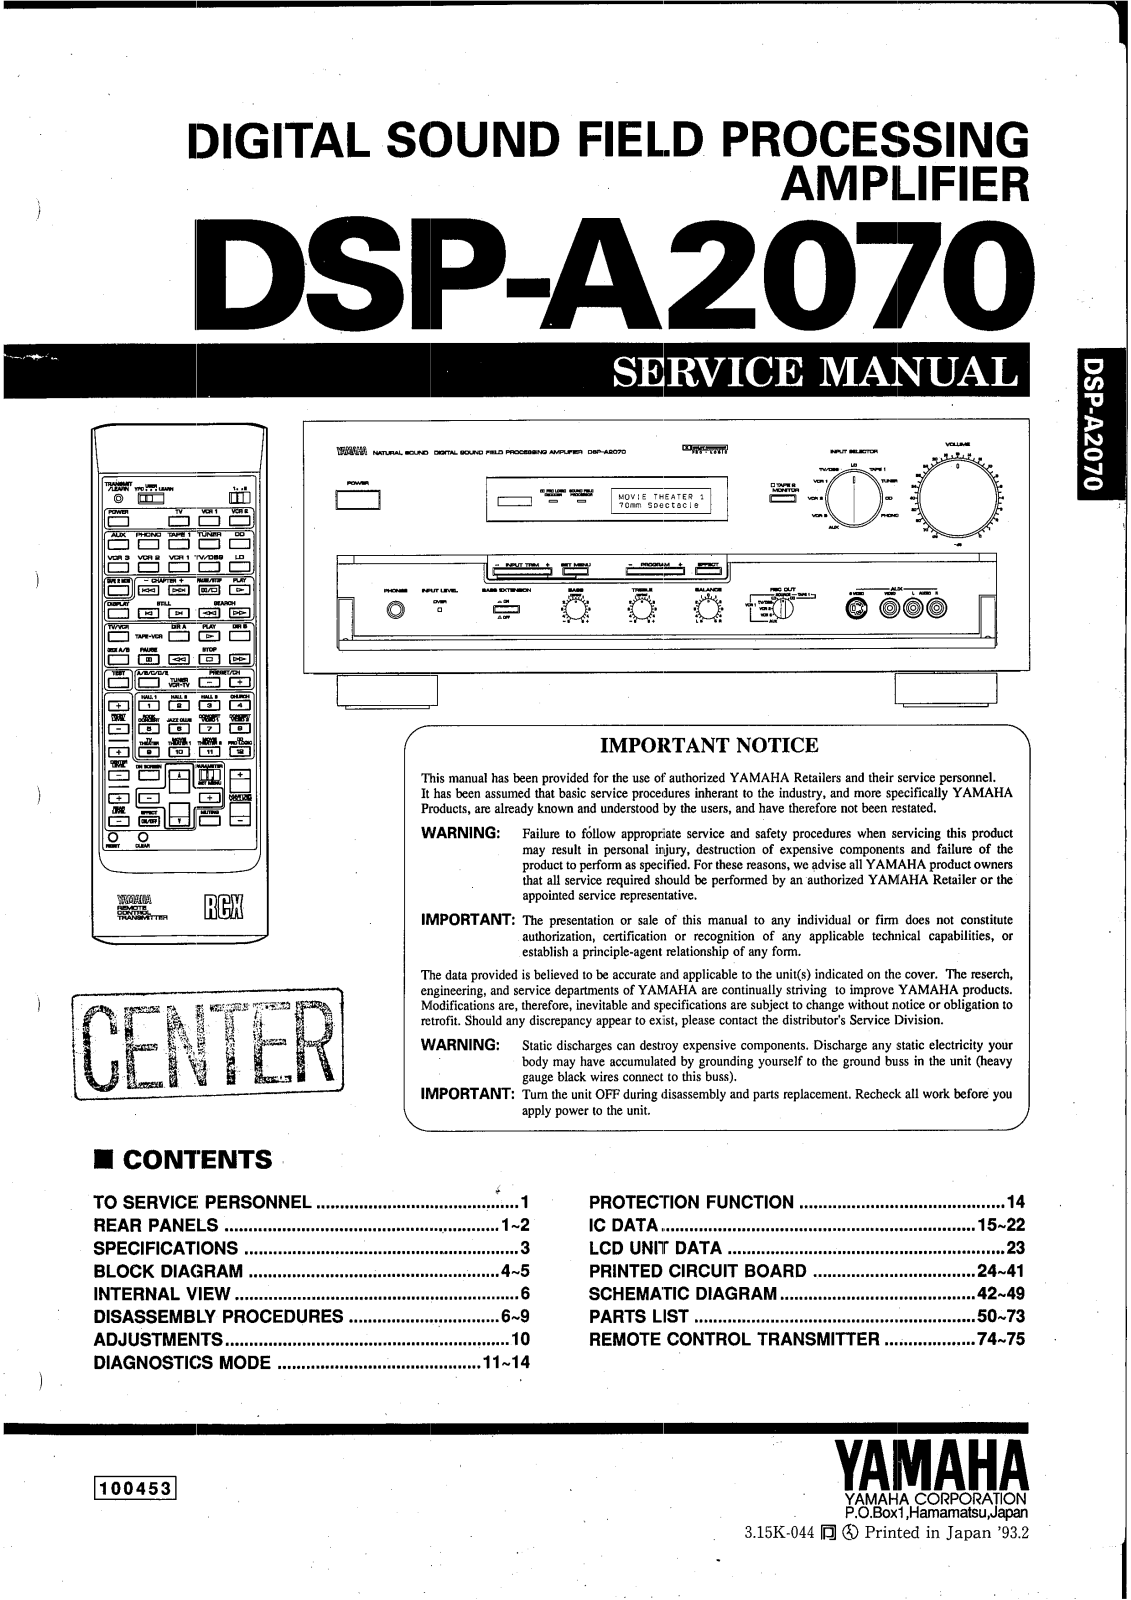 Yamaha DSPA-2070 Service manual